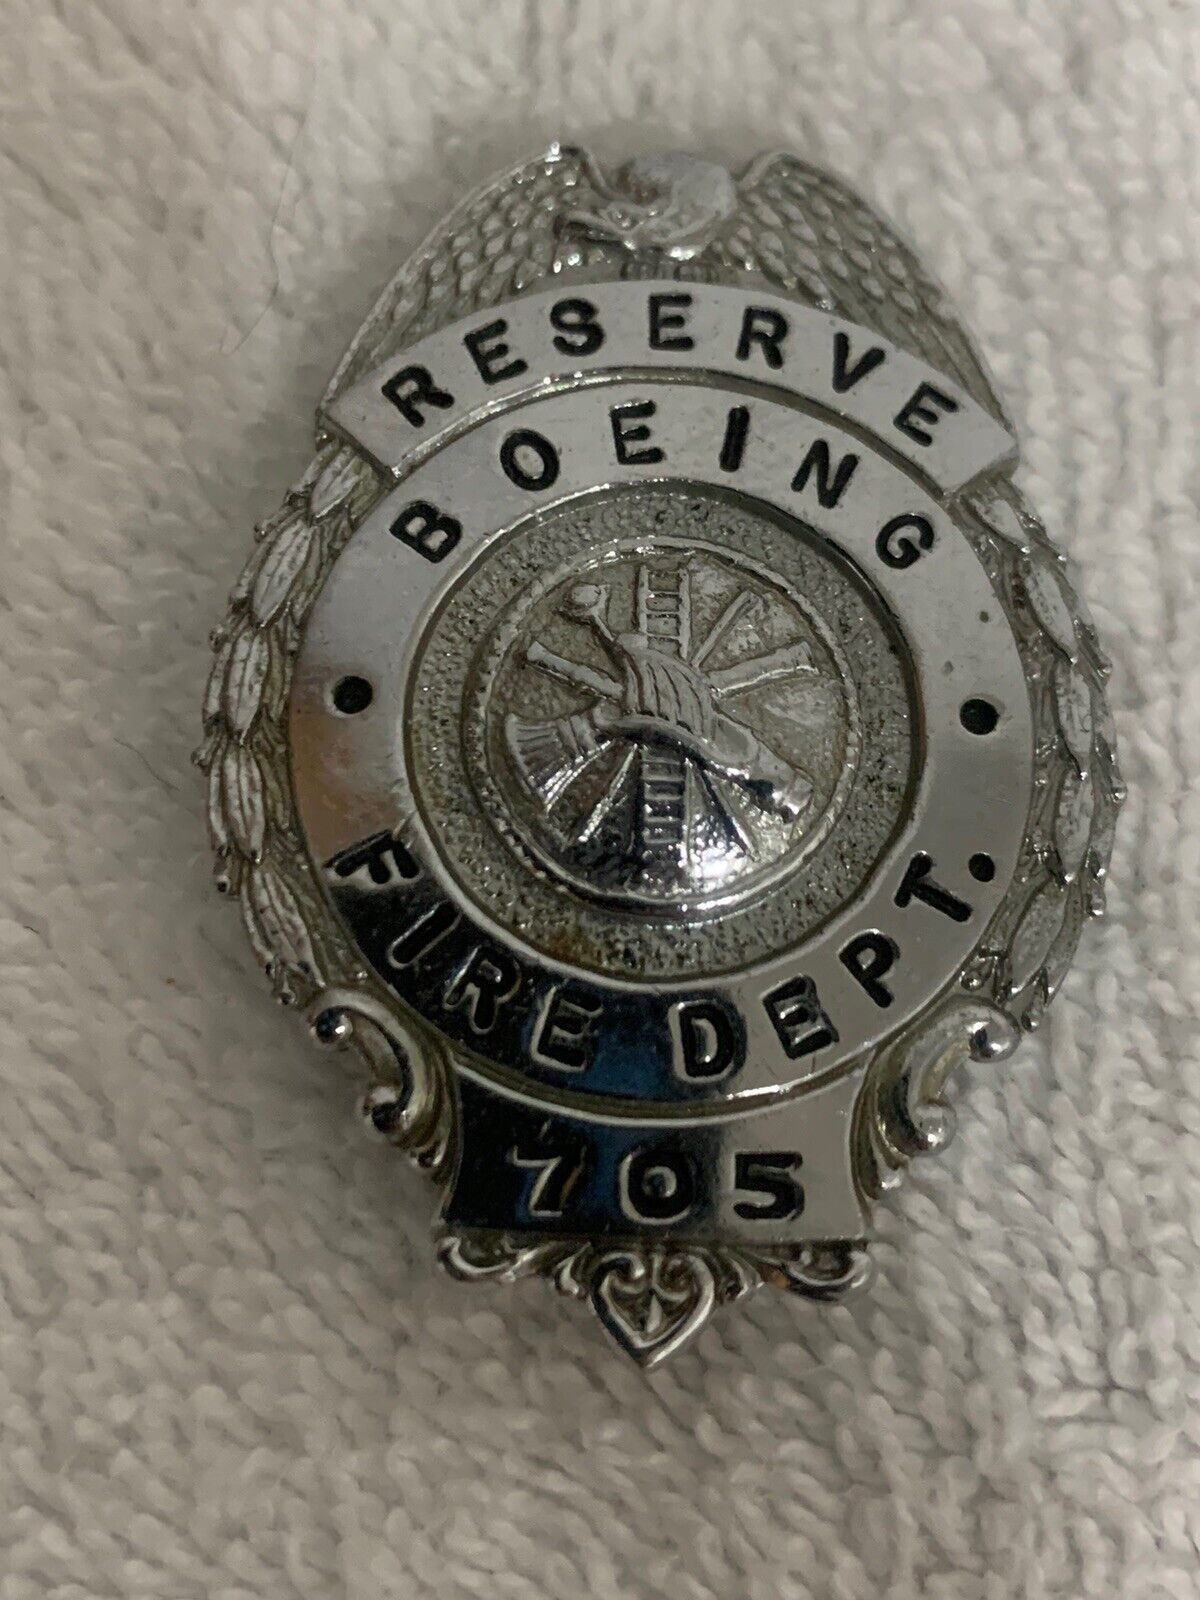 Vintage Obsolete Fireman's Badge #705 Fire Dept. Boeing Reserve (Rare) Nice Cond